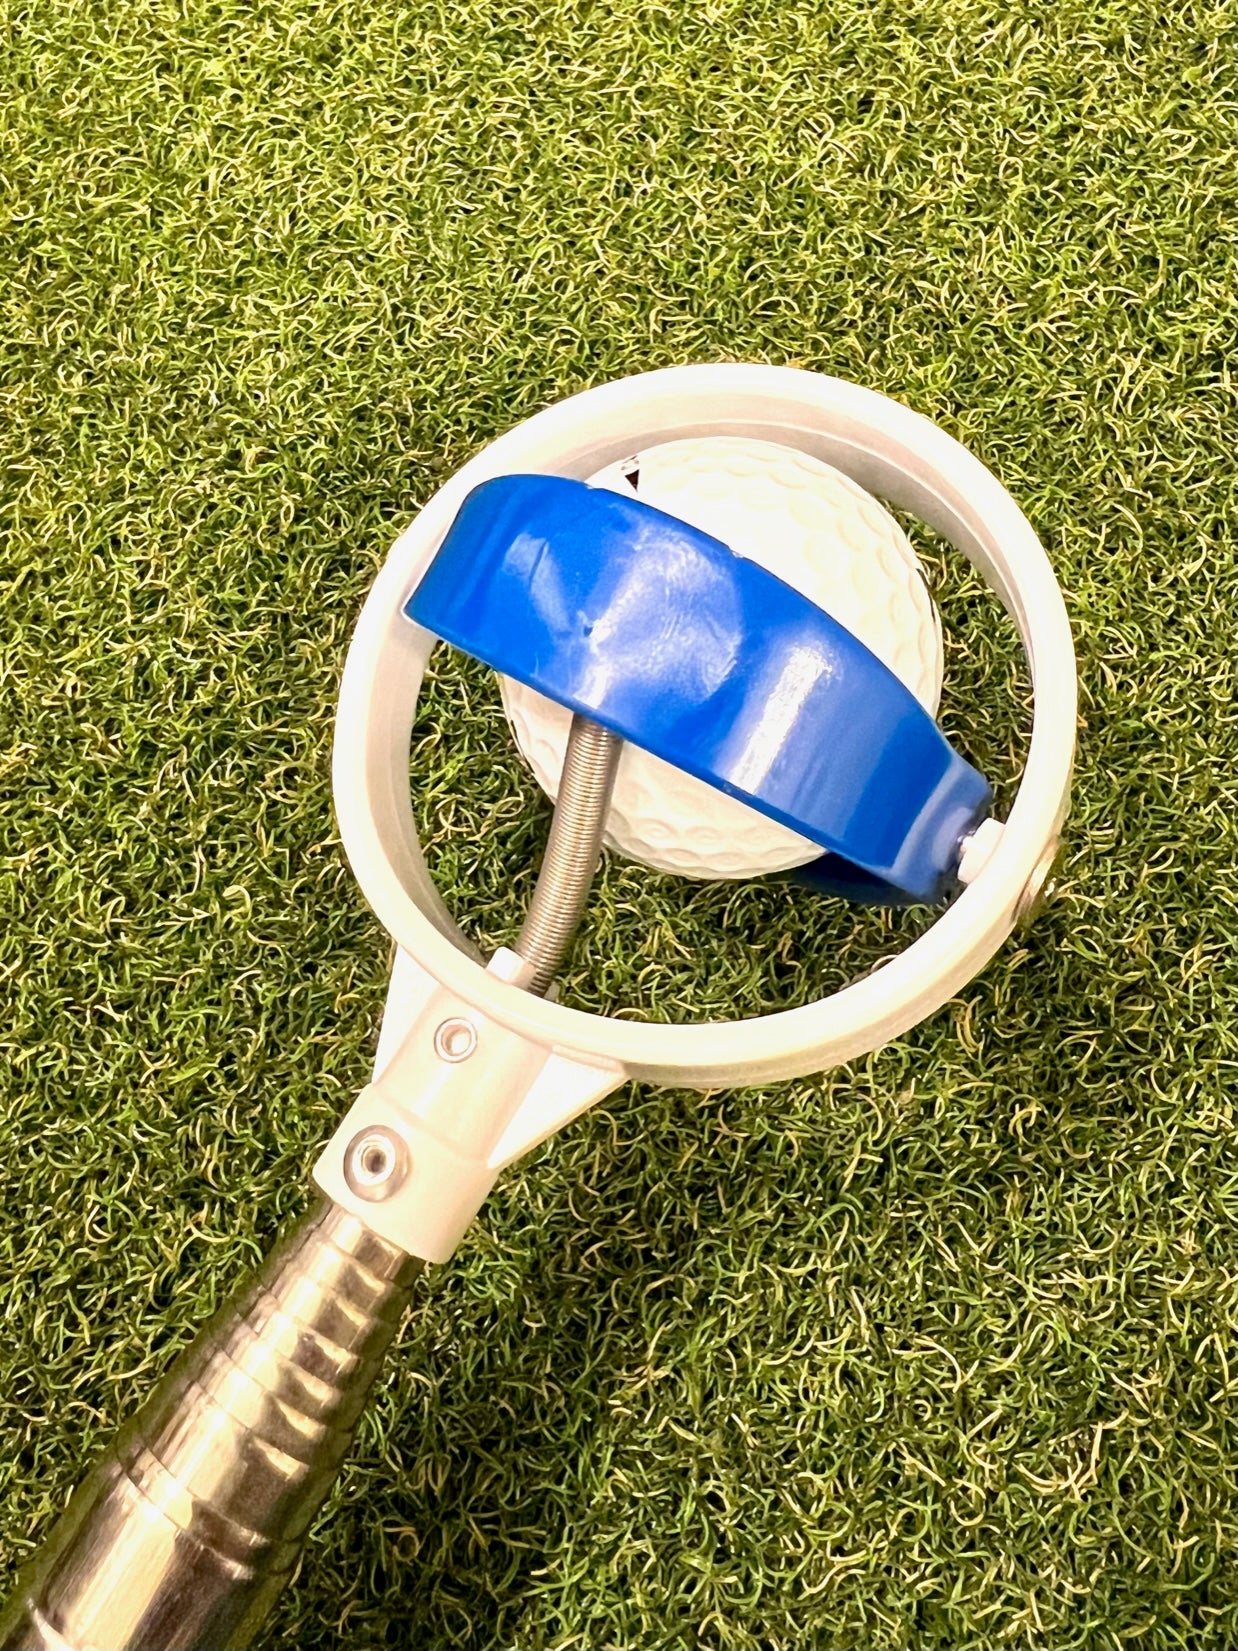 Aluminum Telescoping Compact Golf Ball Retriever (15ft or 9ft)